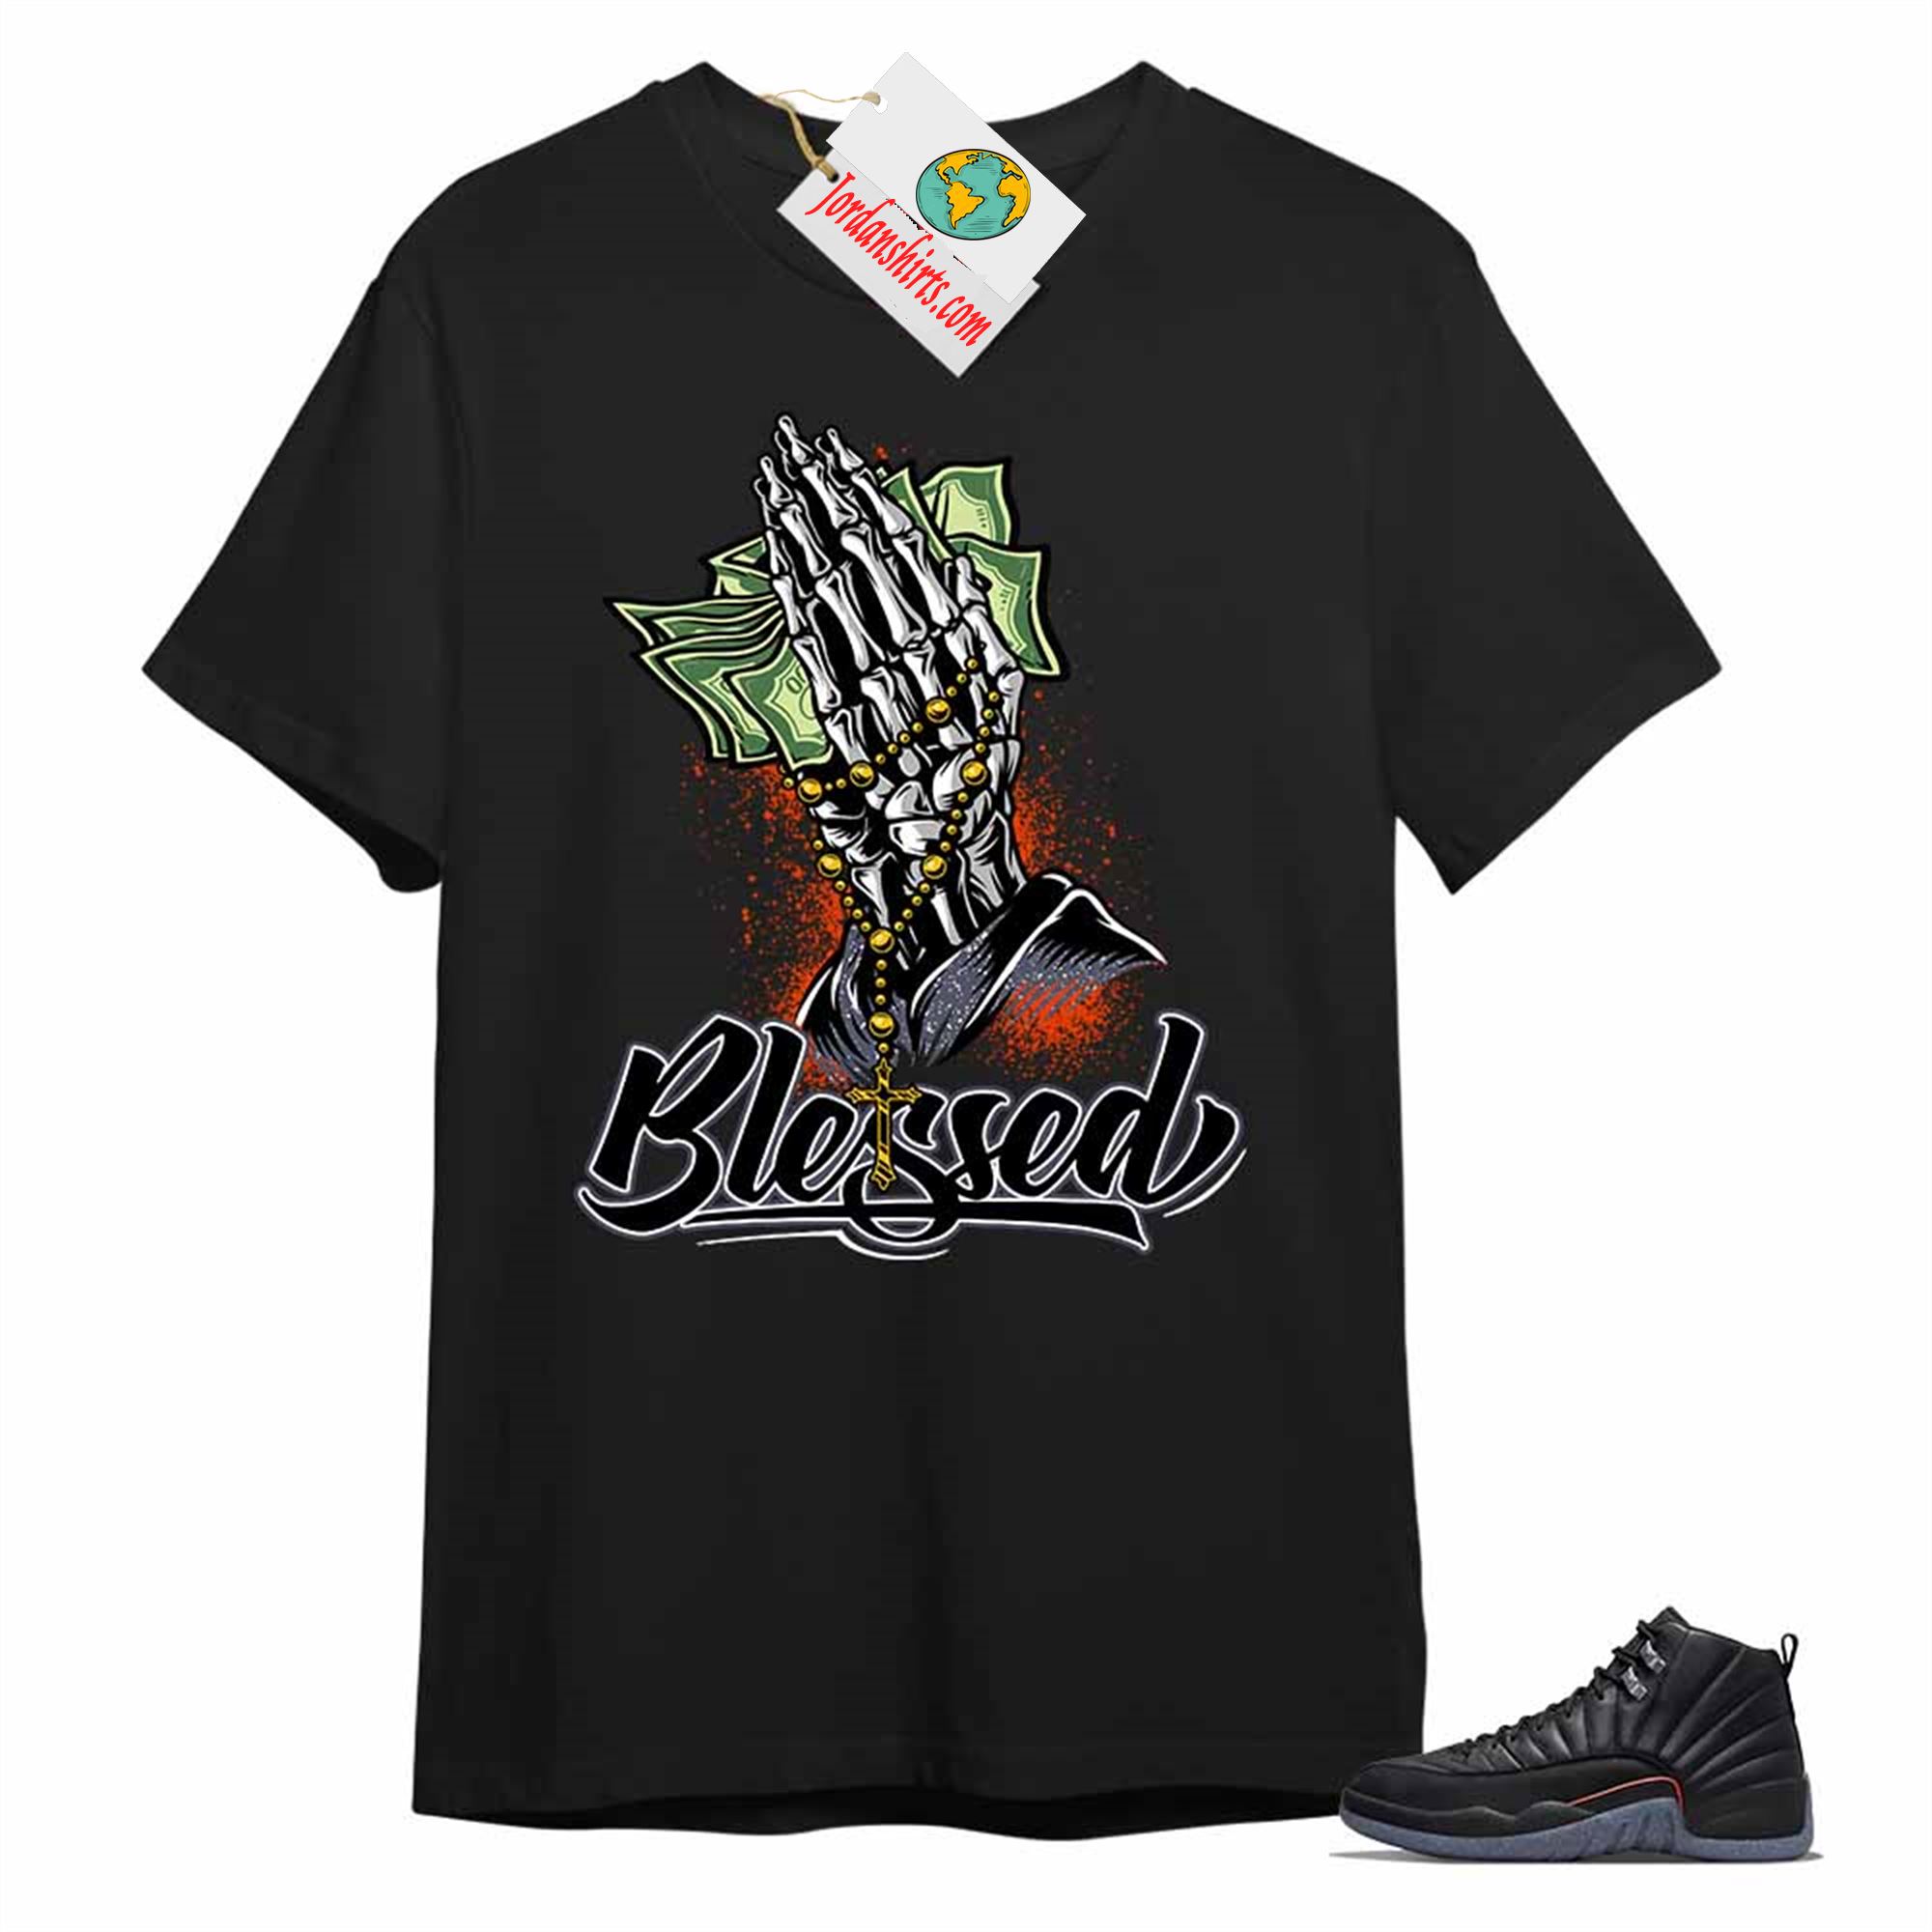 Jordan 12 Shirt, Blessed Pray Hand Money Black T-shirt Air Jordan 12 Utility Grind 12s Plus Size Up To 5xl